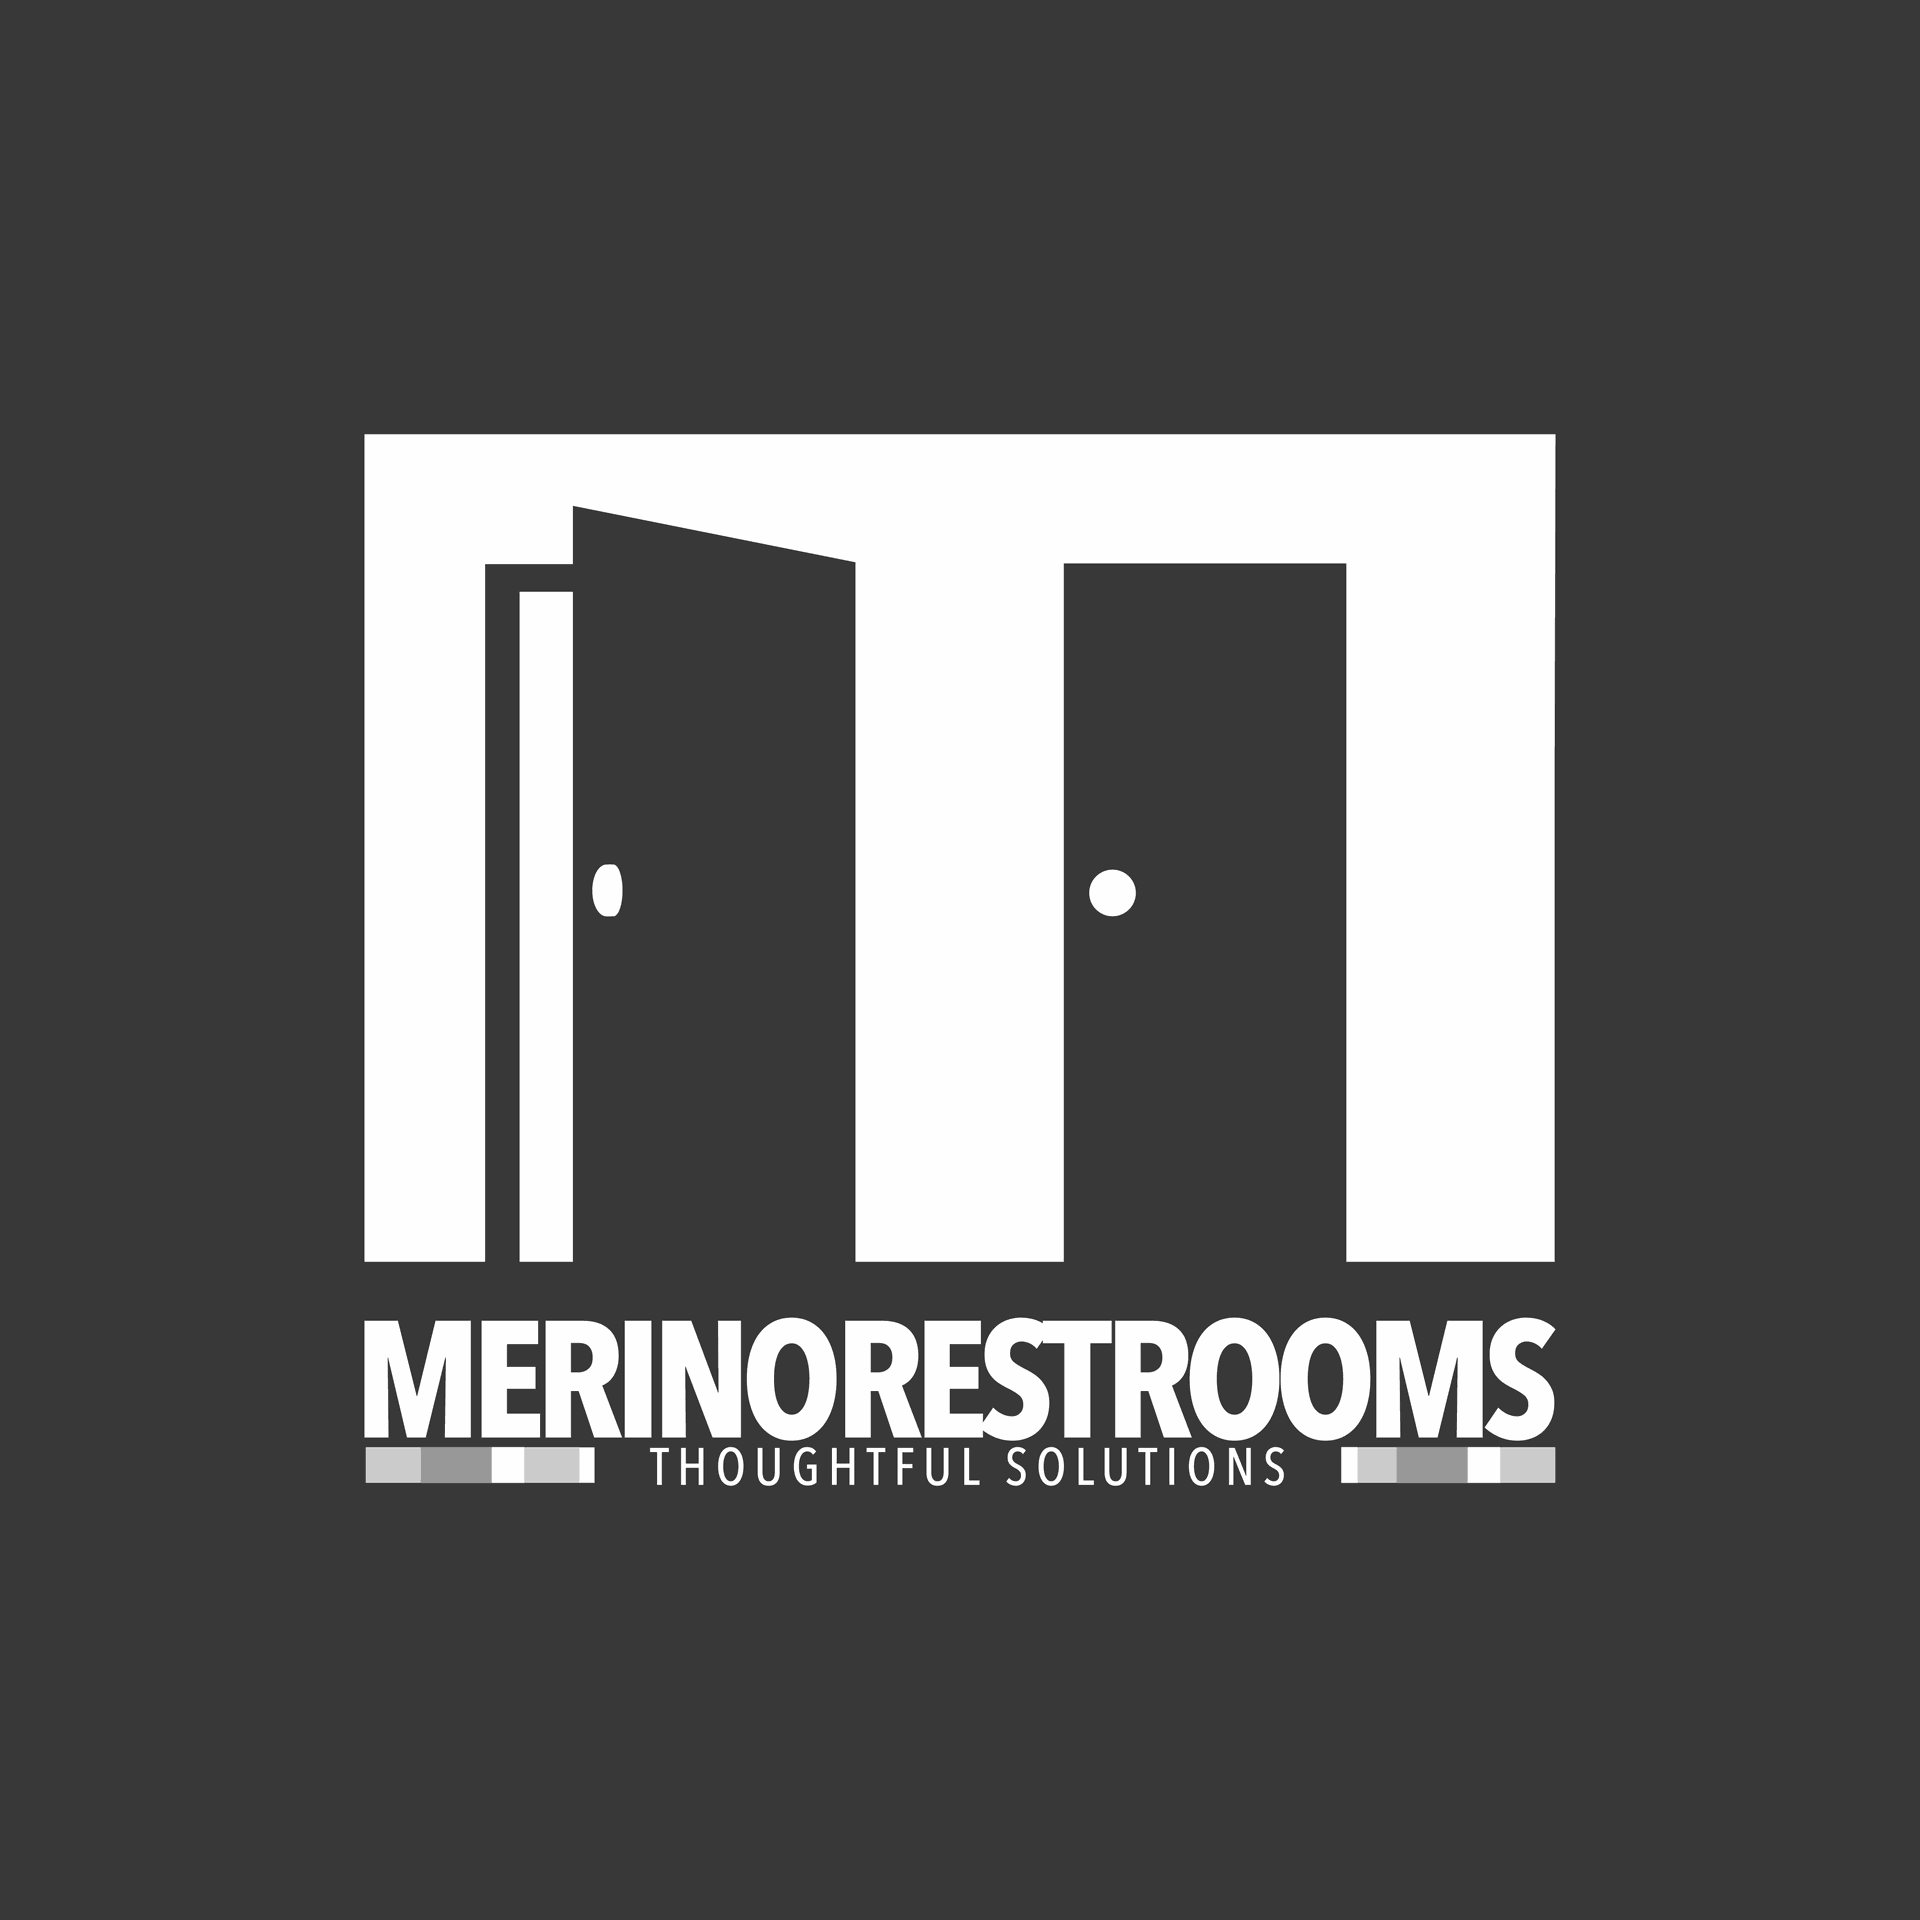 Brand: Merino Restrooms